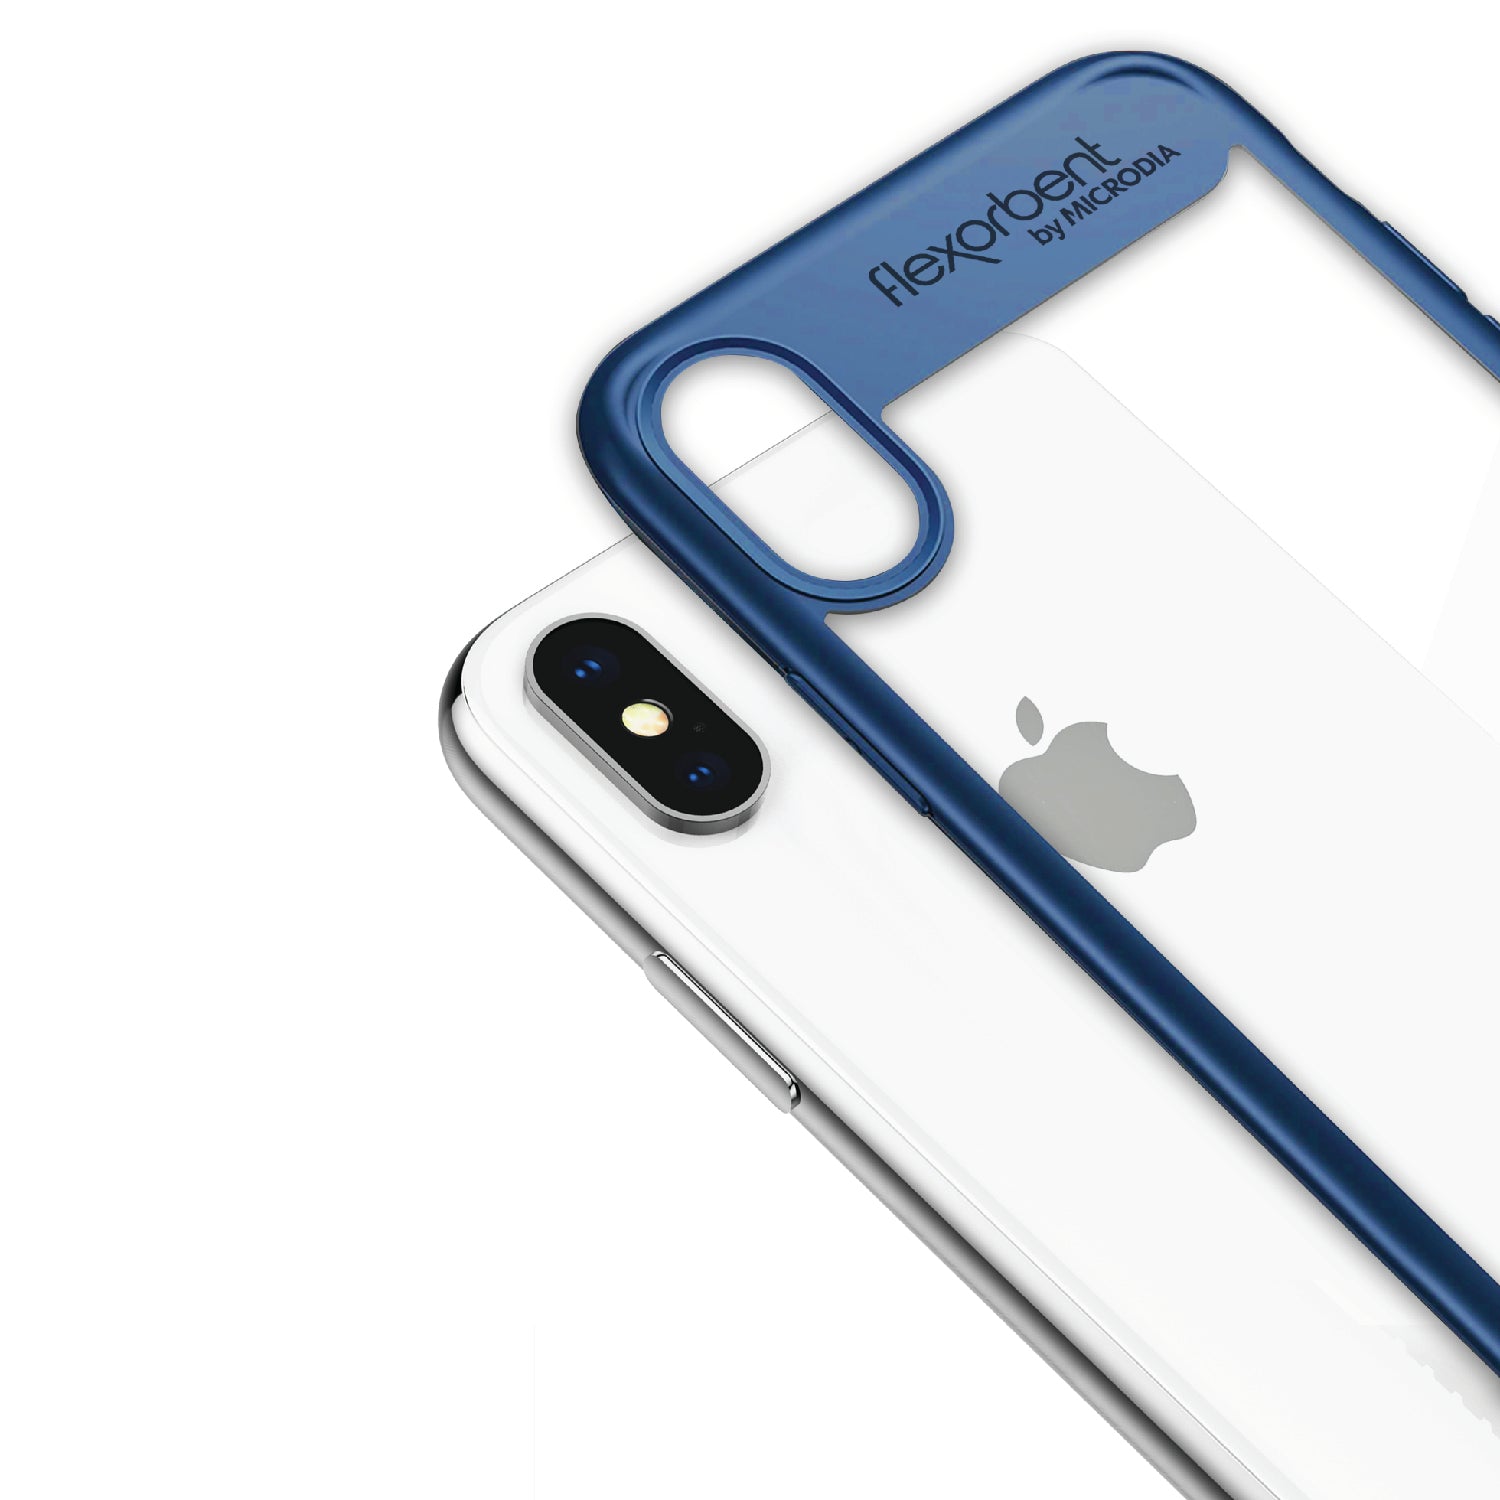 MICRODIA Flexorbent SAVILLE Phone Case, for iPhone X / 8 / 8 Plus